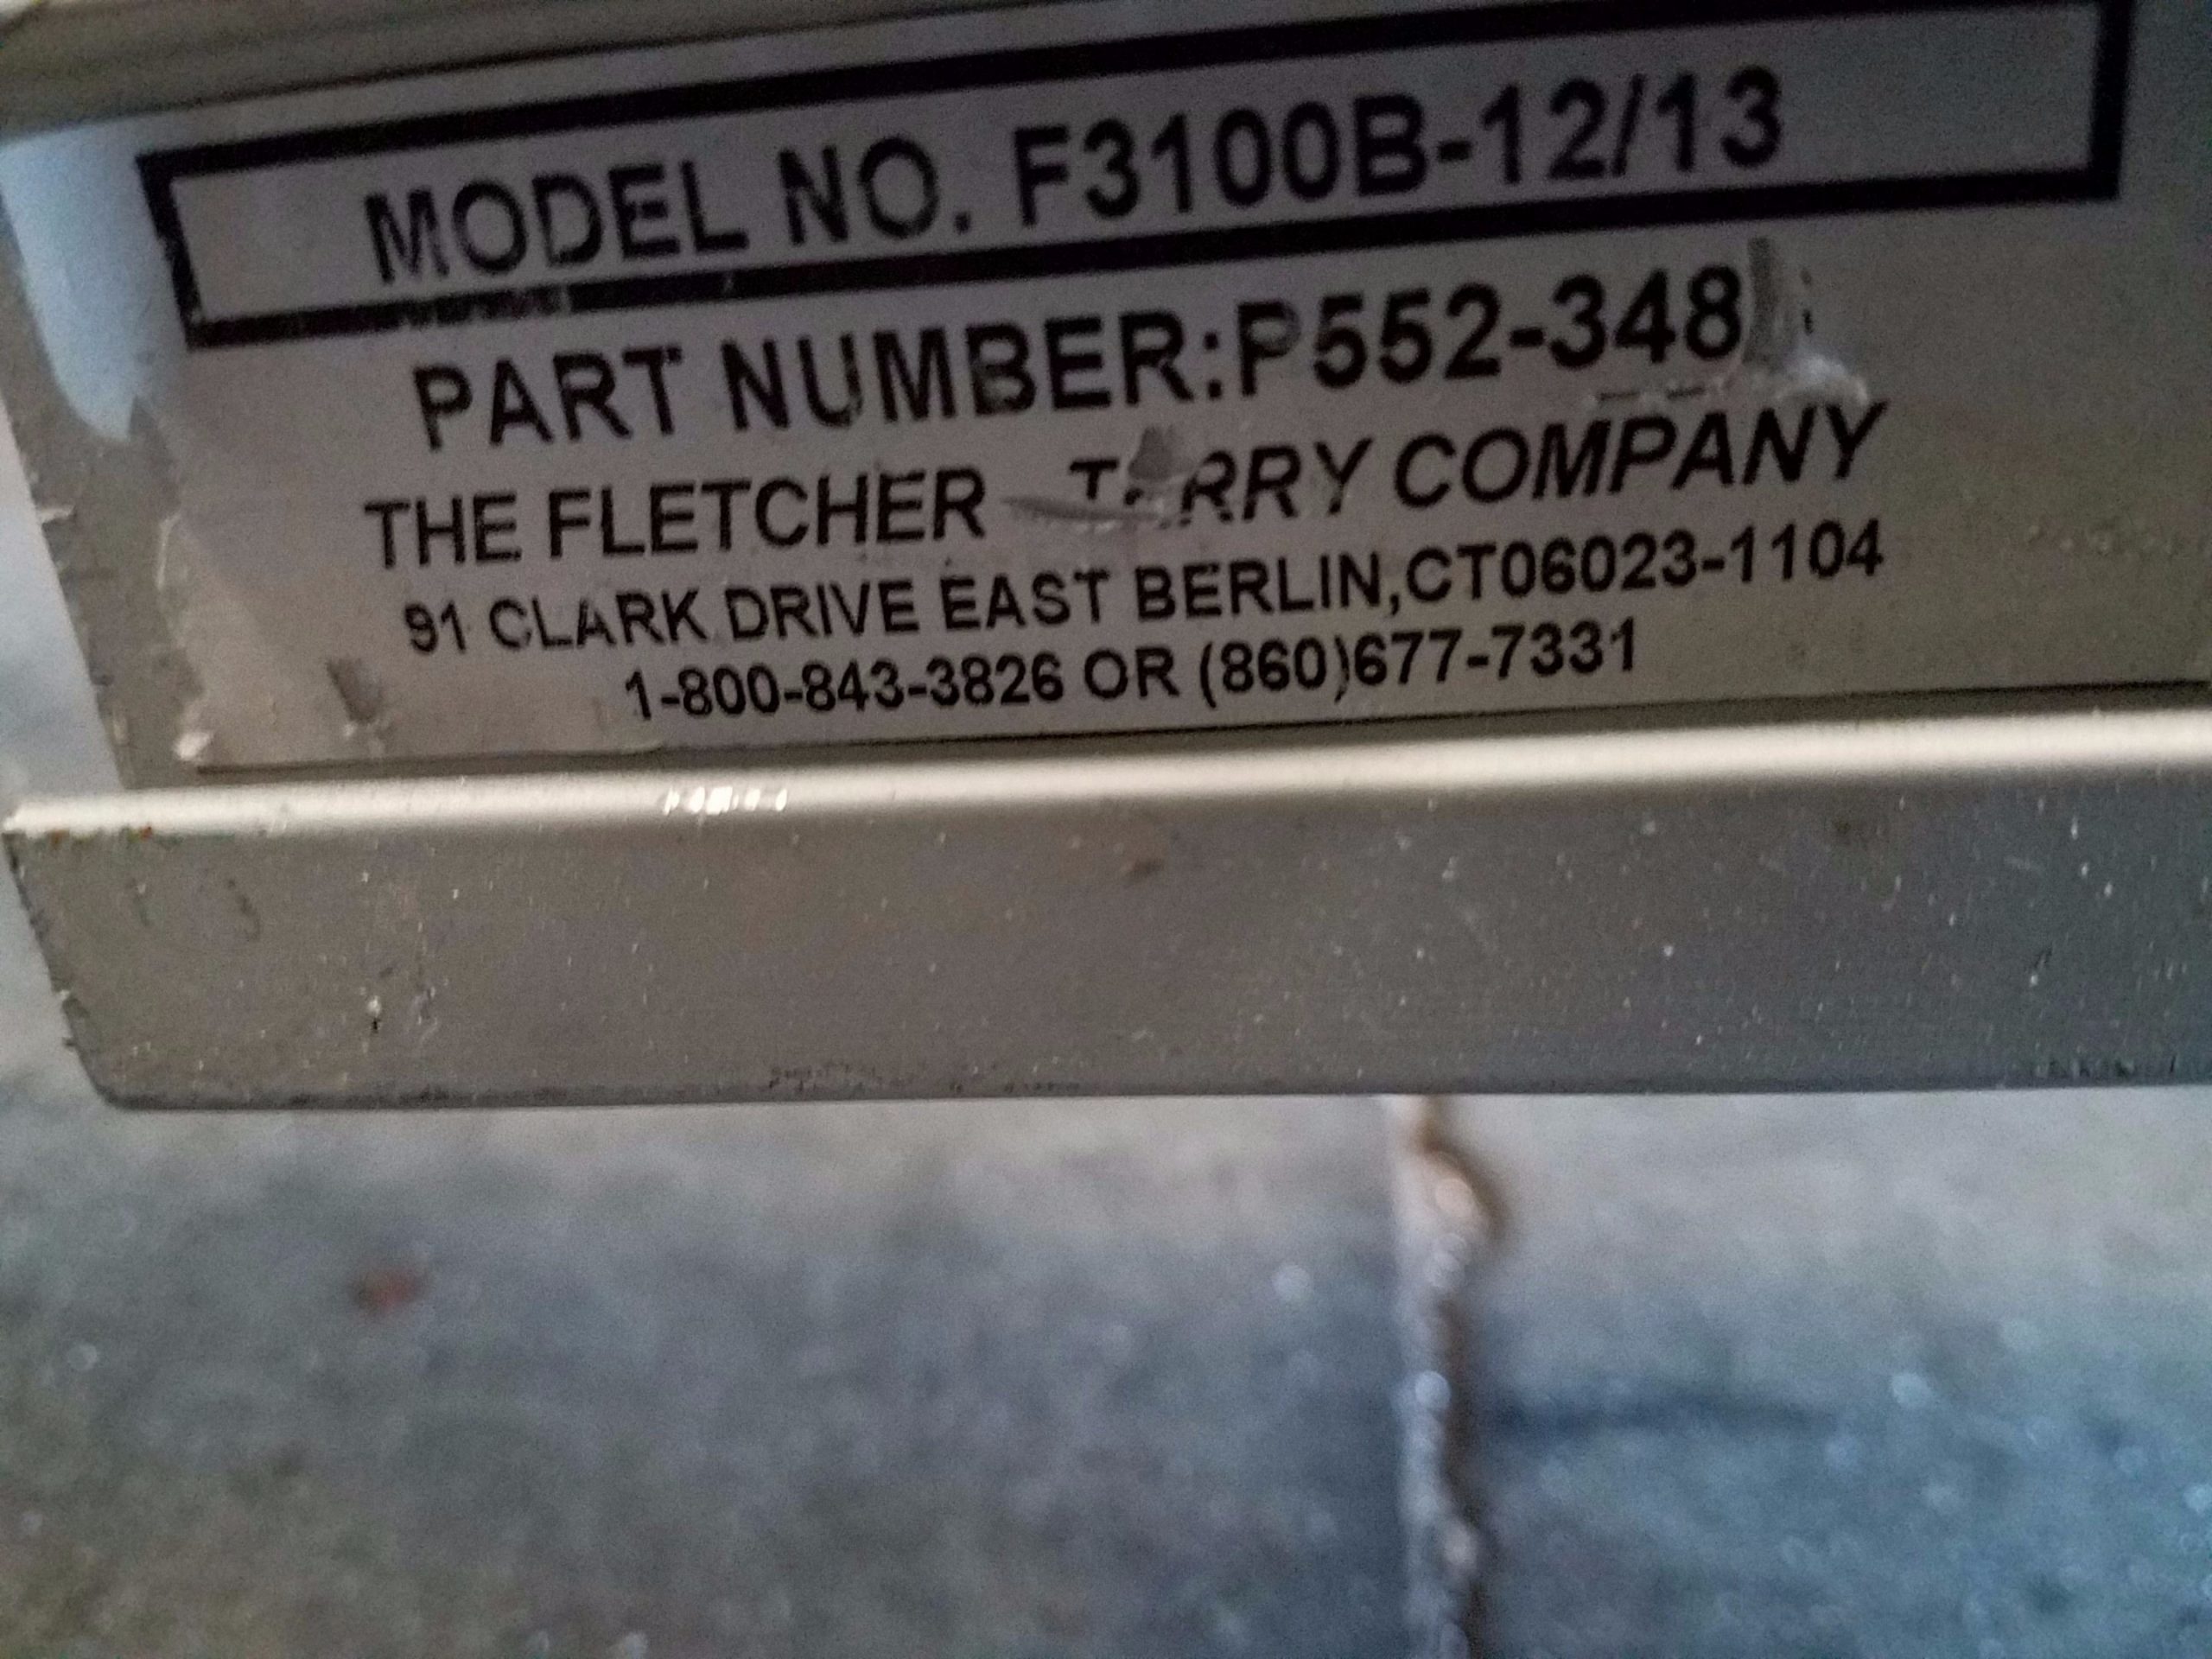 Fletcher Terry 3100 Glass Cutter (used) Item # UFE-C1489